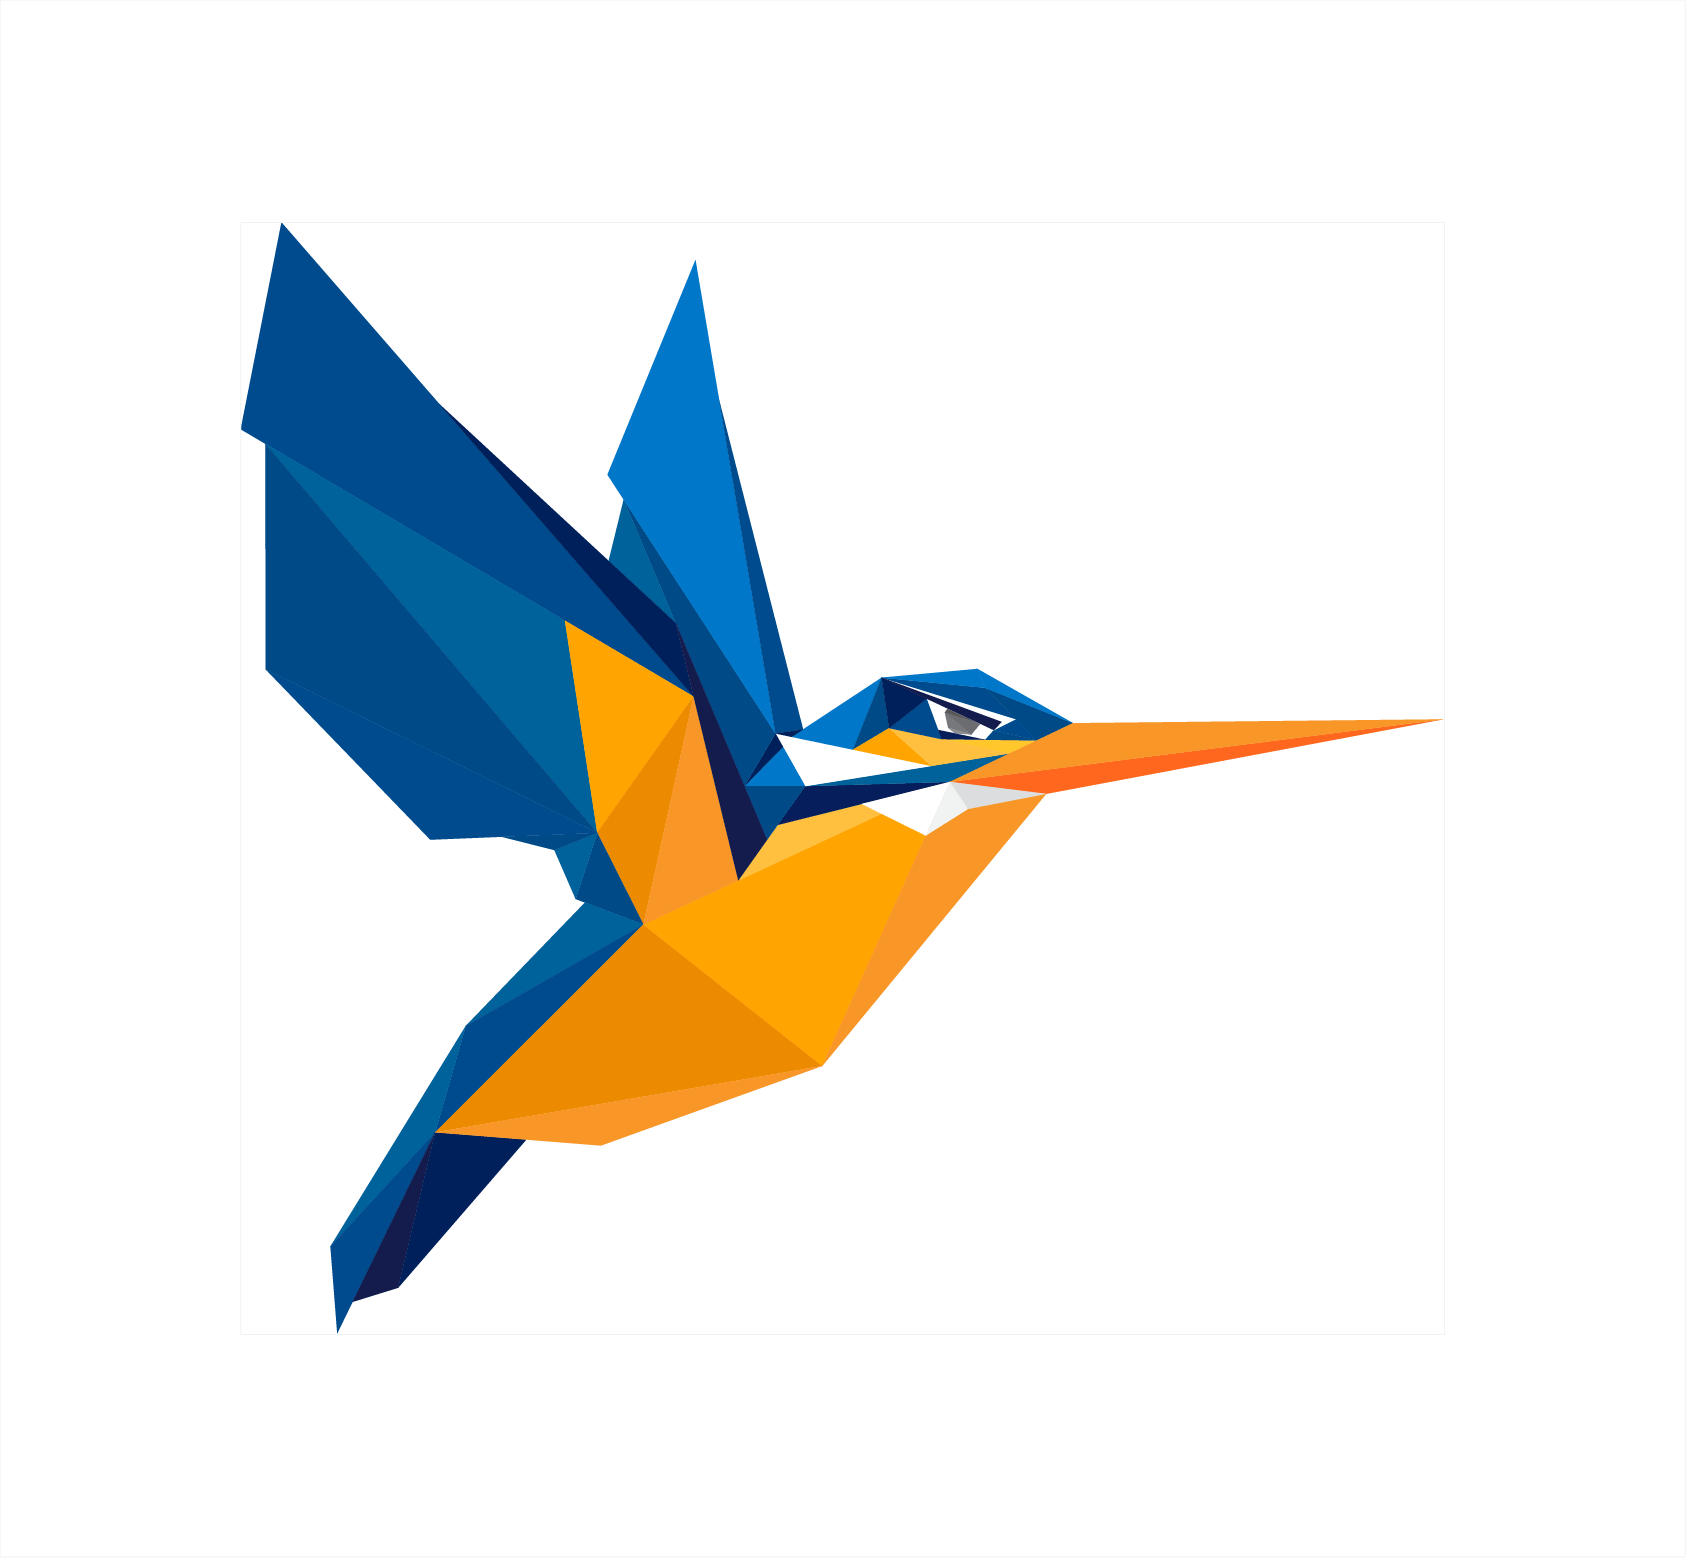 Kingfisher Bird PNG Background Image